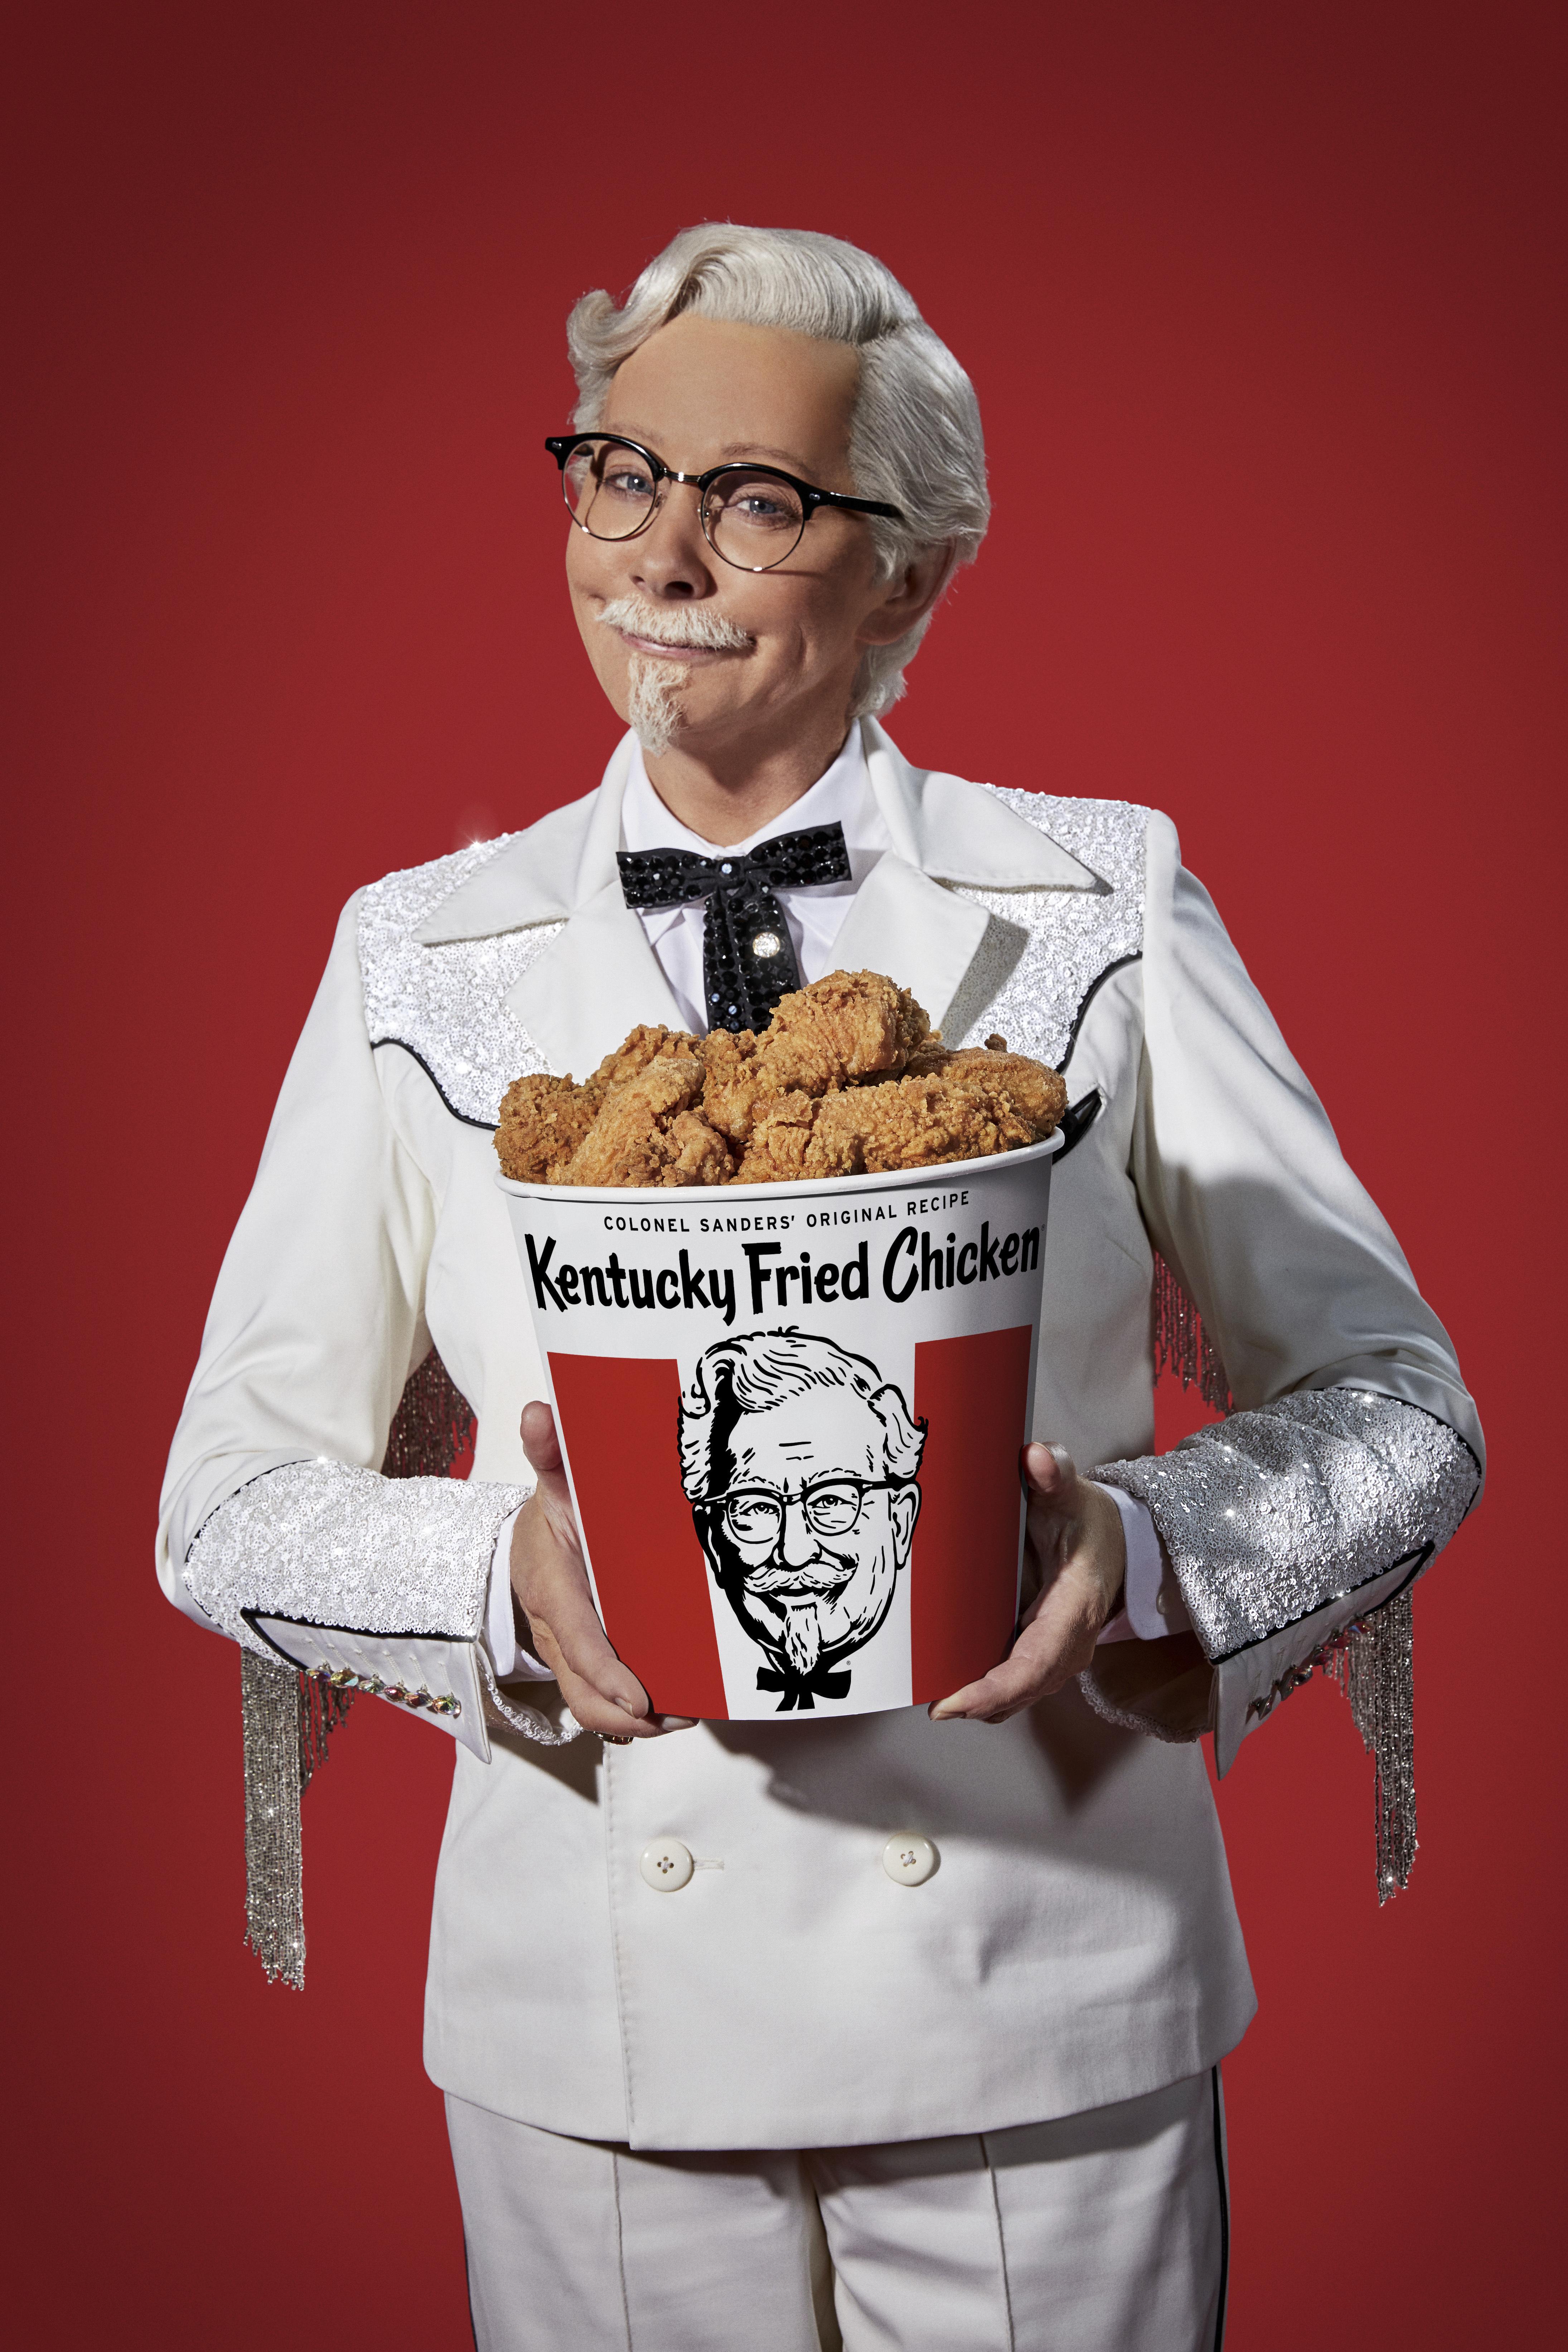 KFC taps Reba McEntire as next colonel, breaking gender barrier The